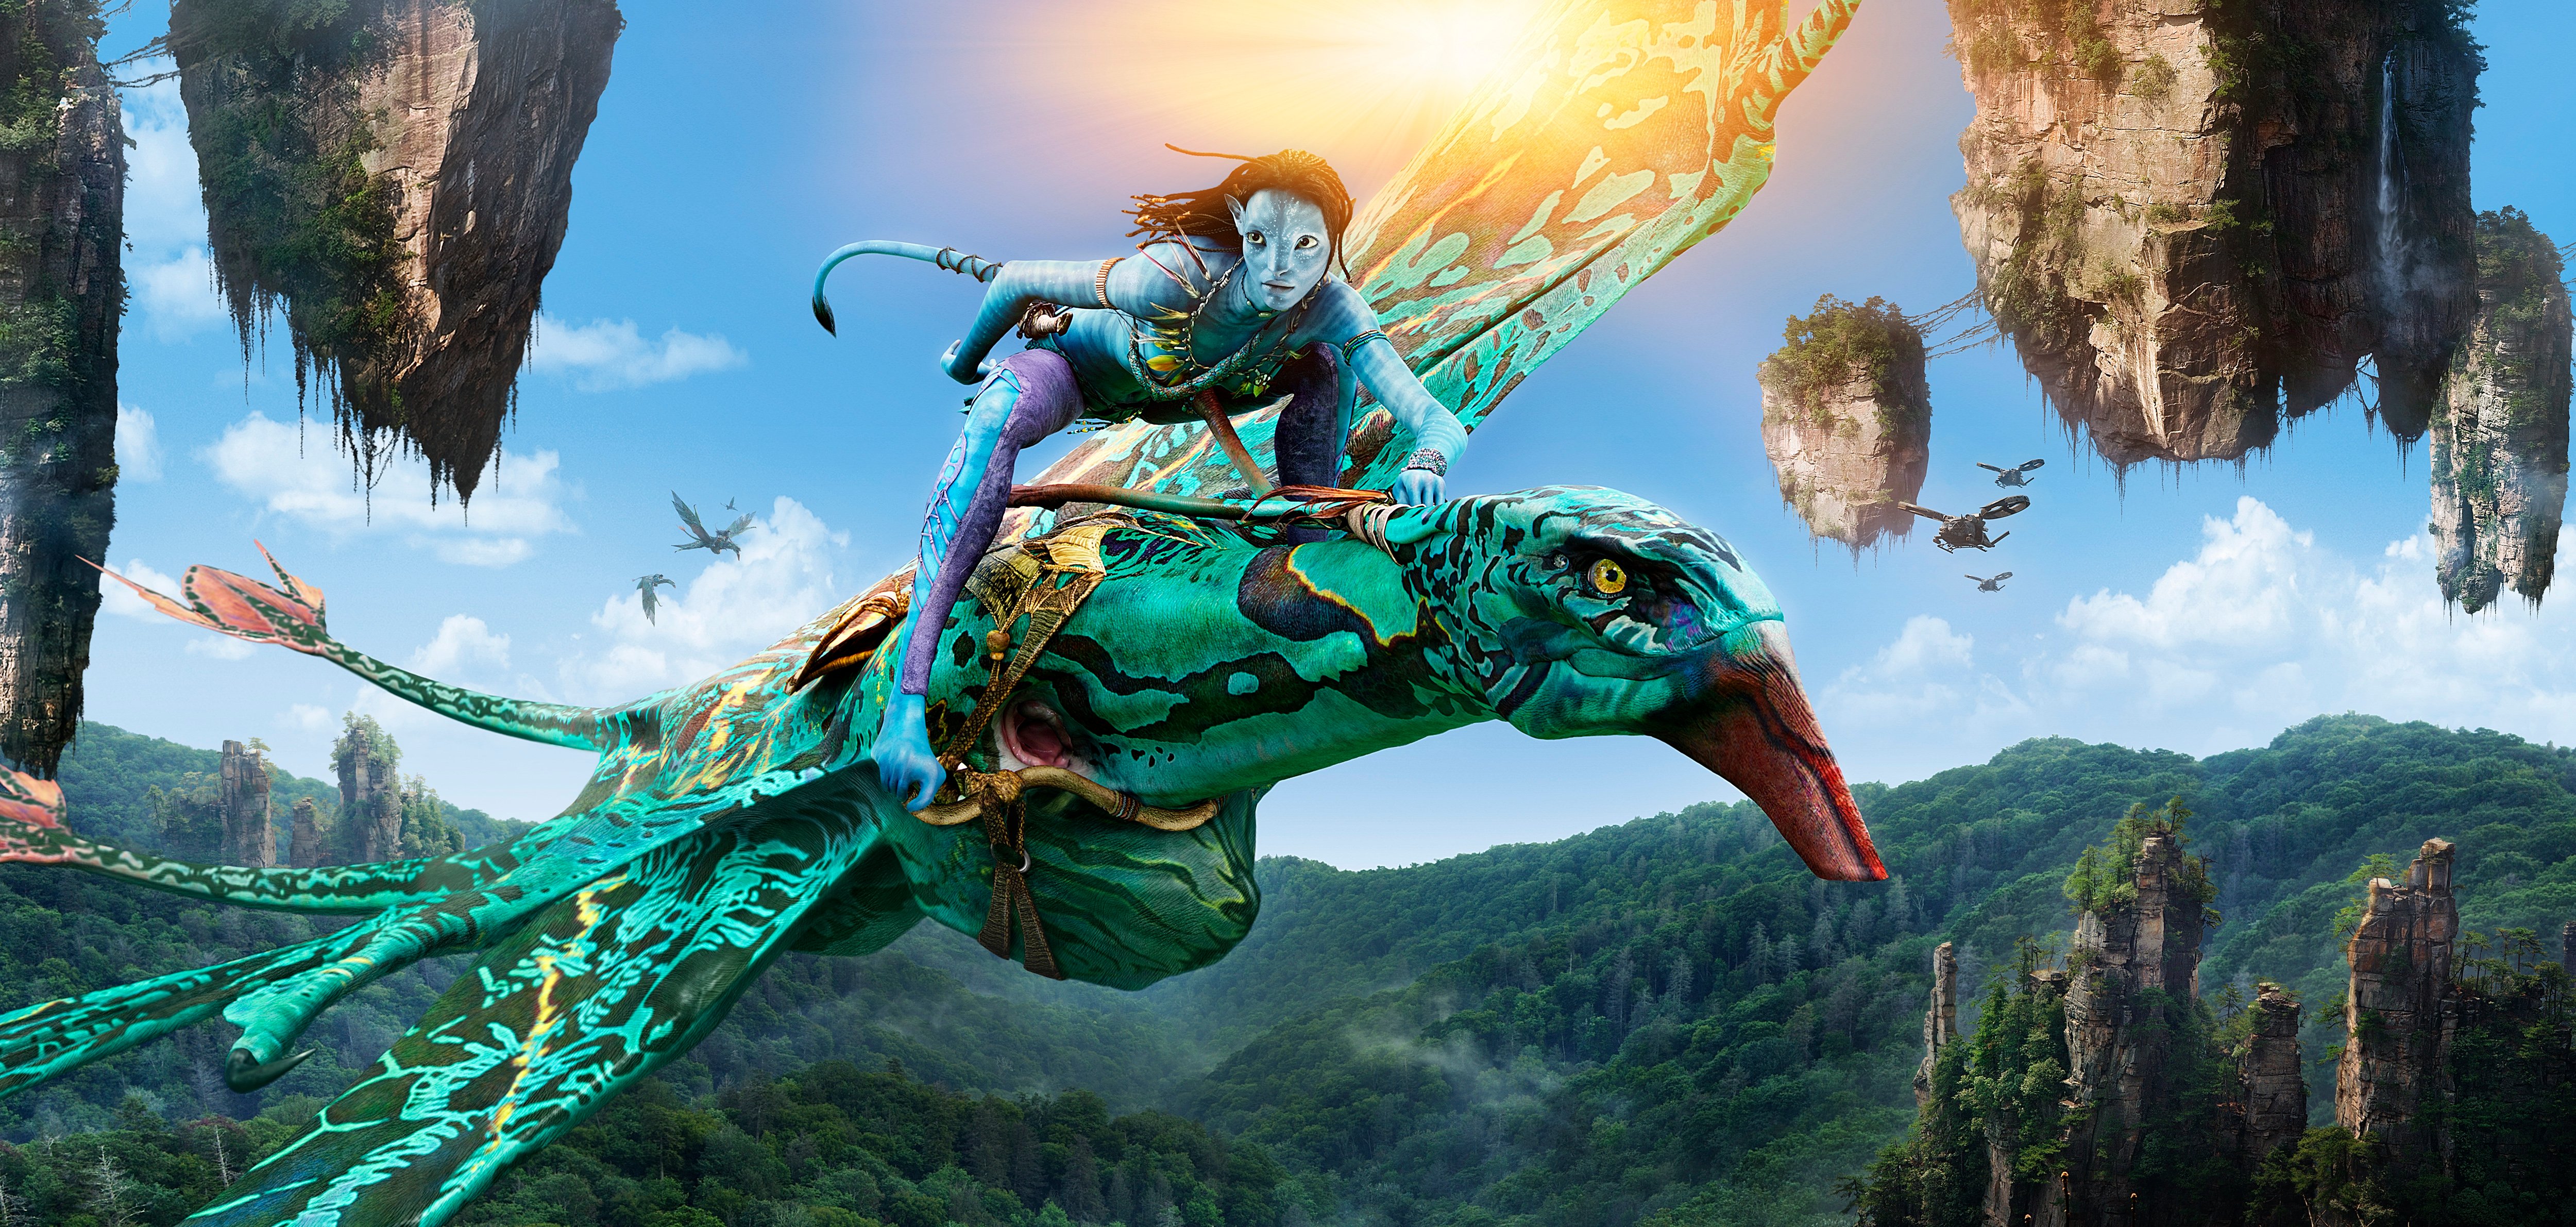 Avatar 2 Full Movie Download Review  HINDI  TeknikalRaman